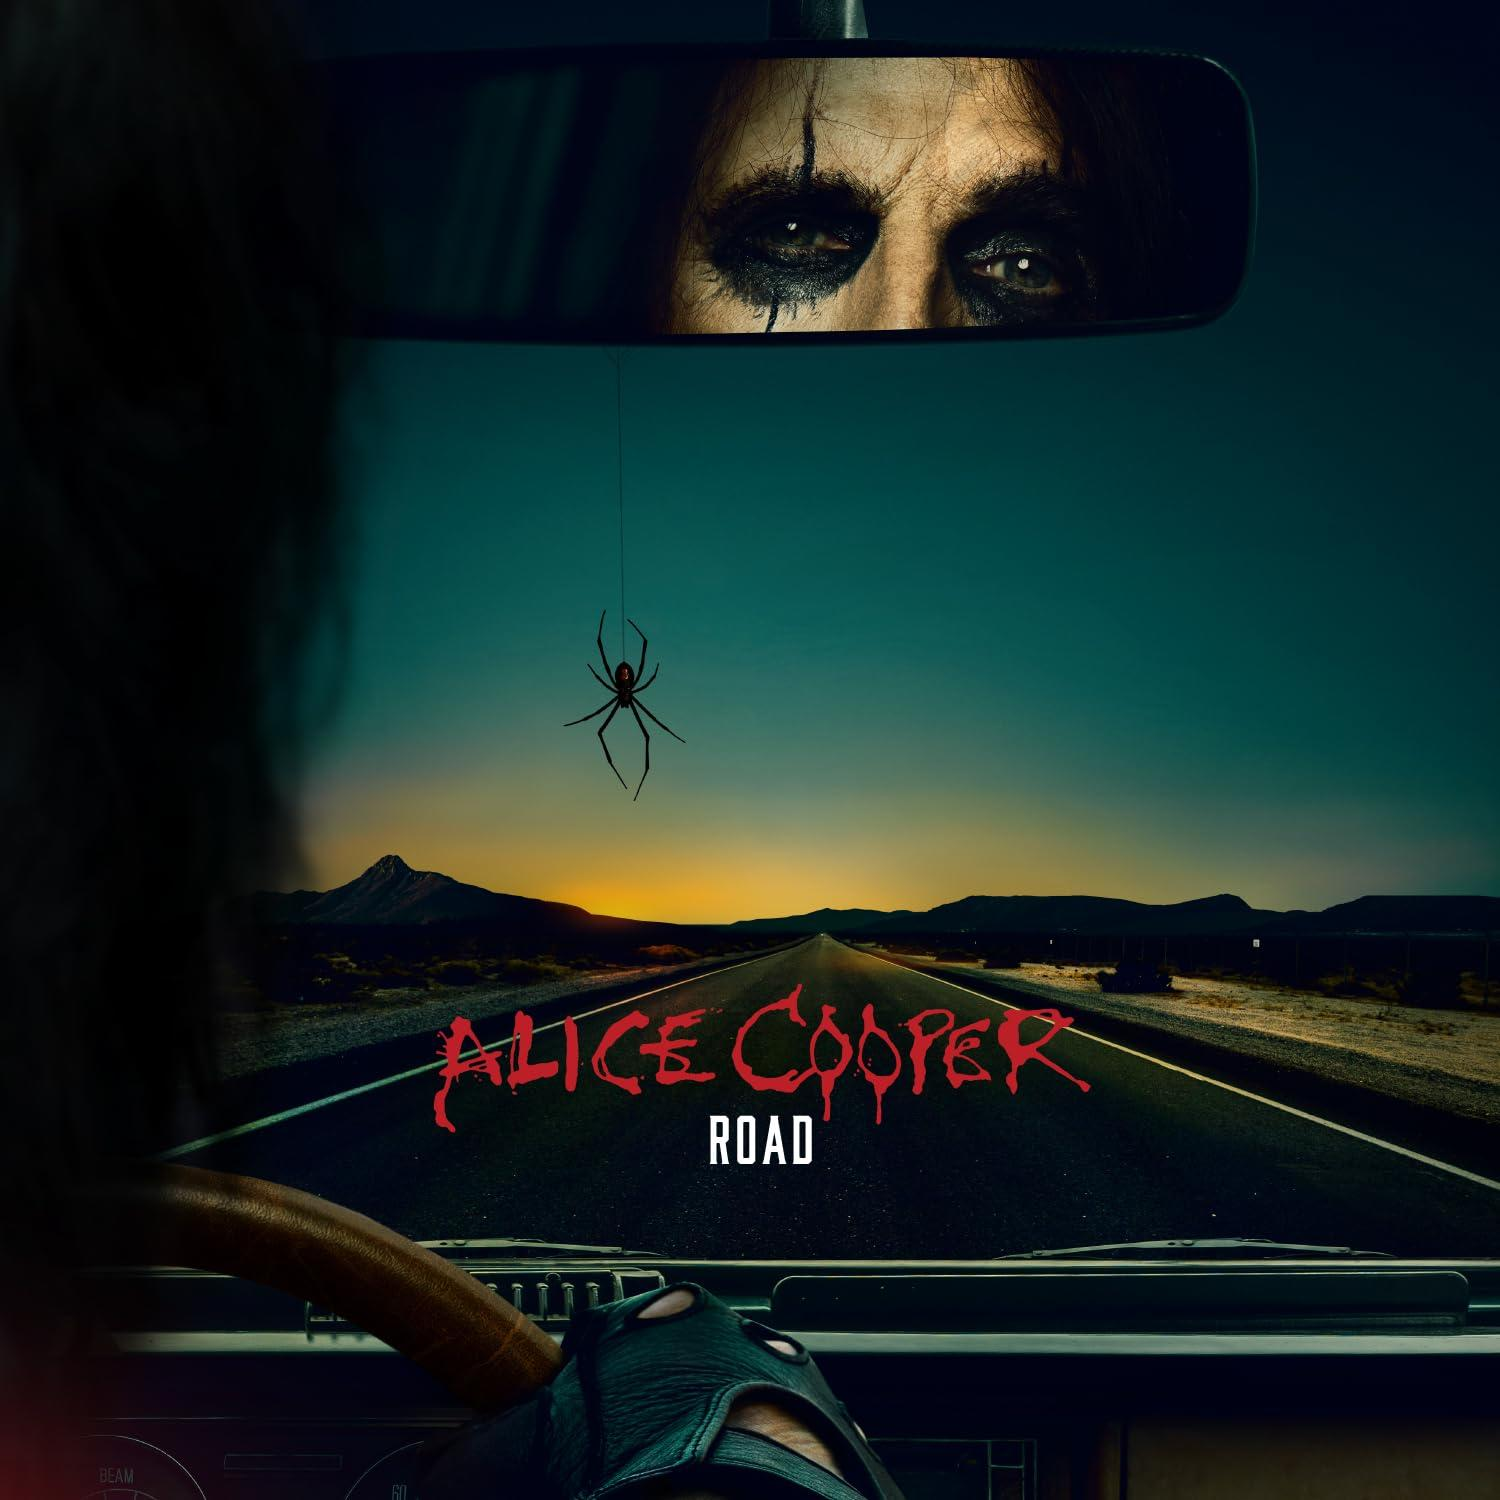 Alice Cooper - ROAD - Video) DVD + (CD